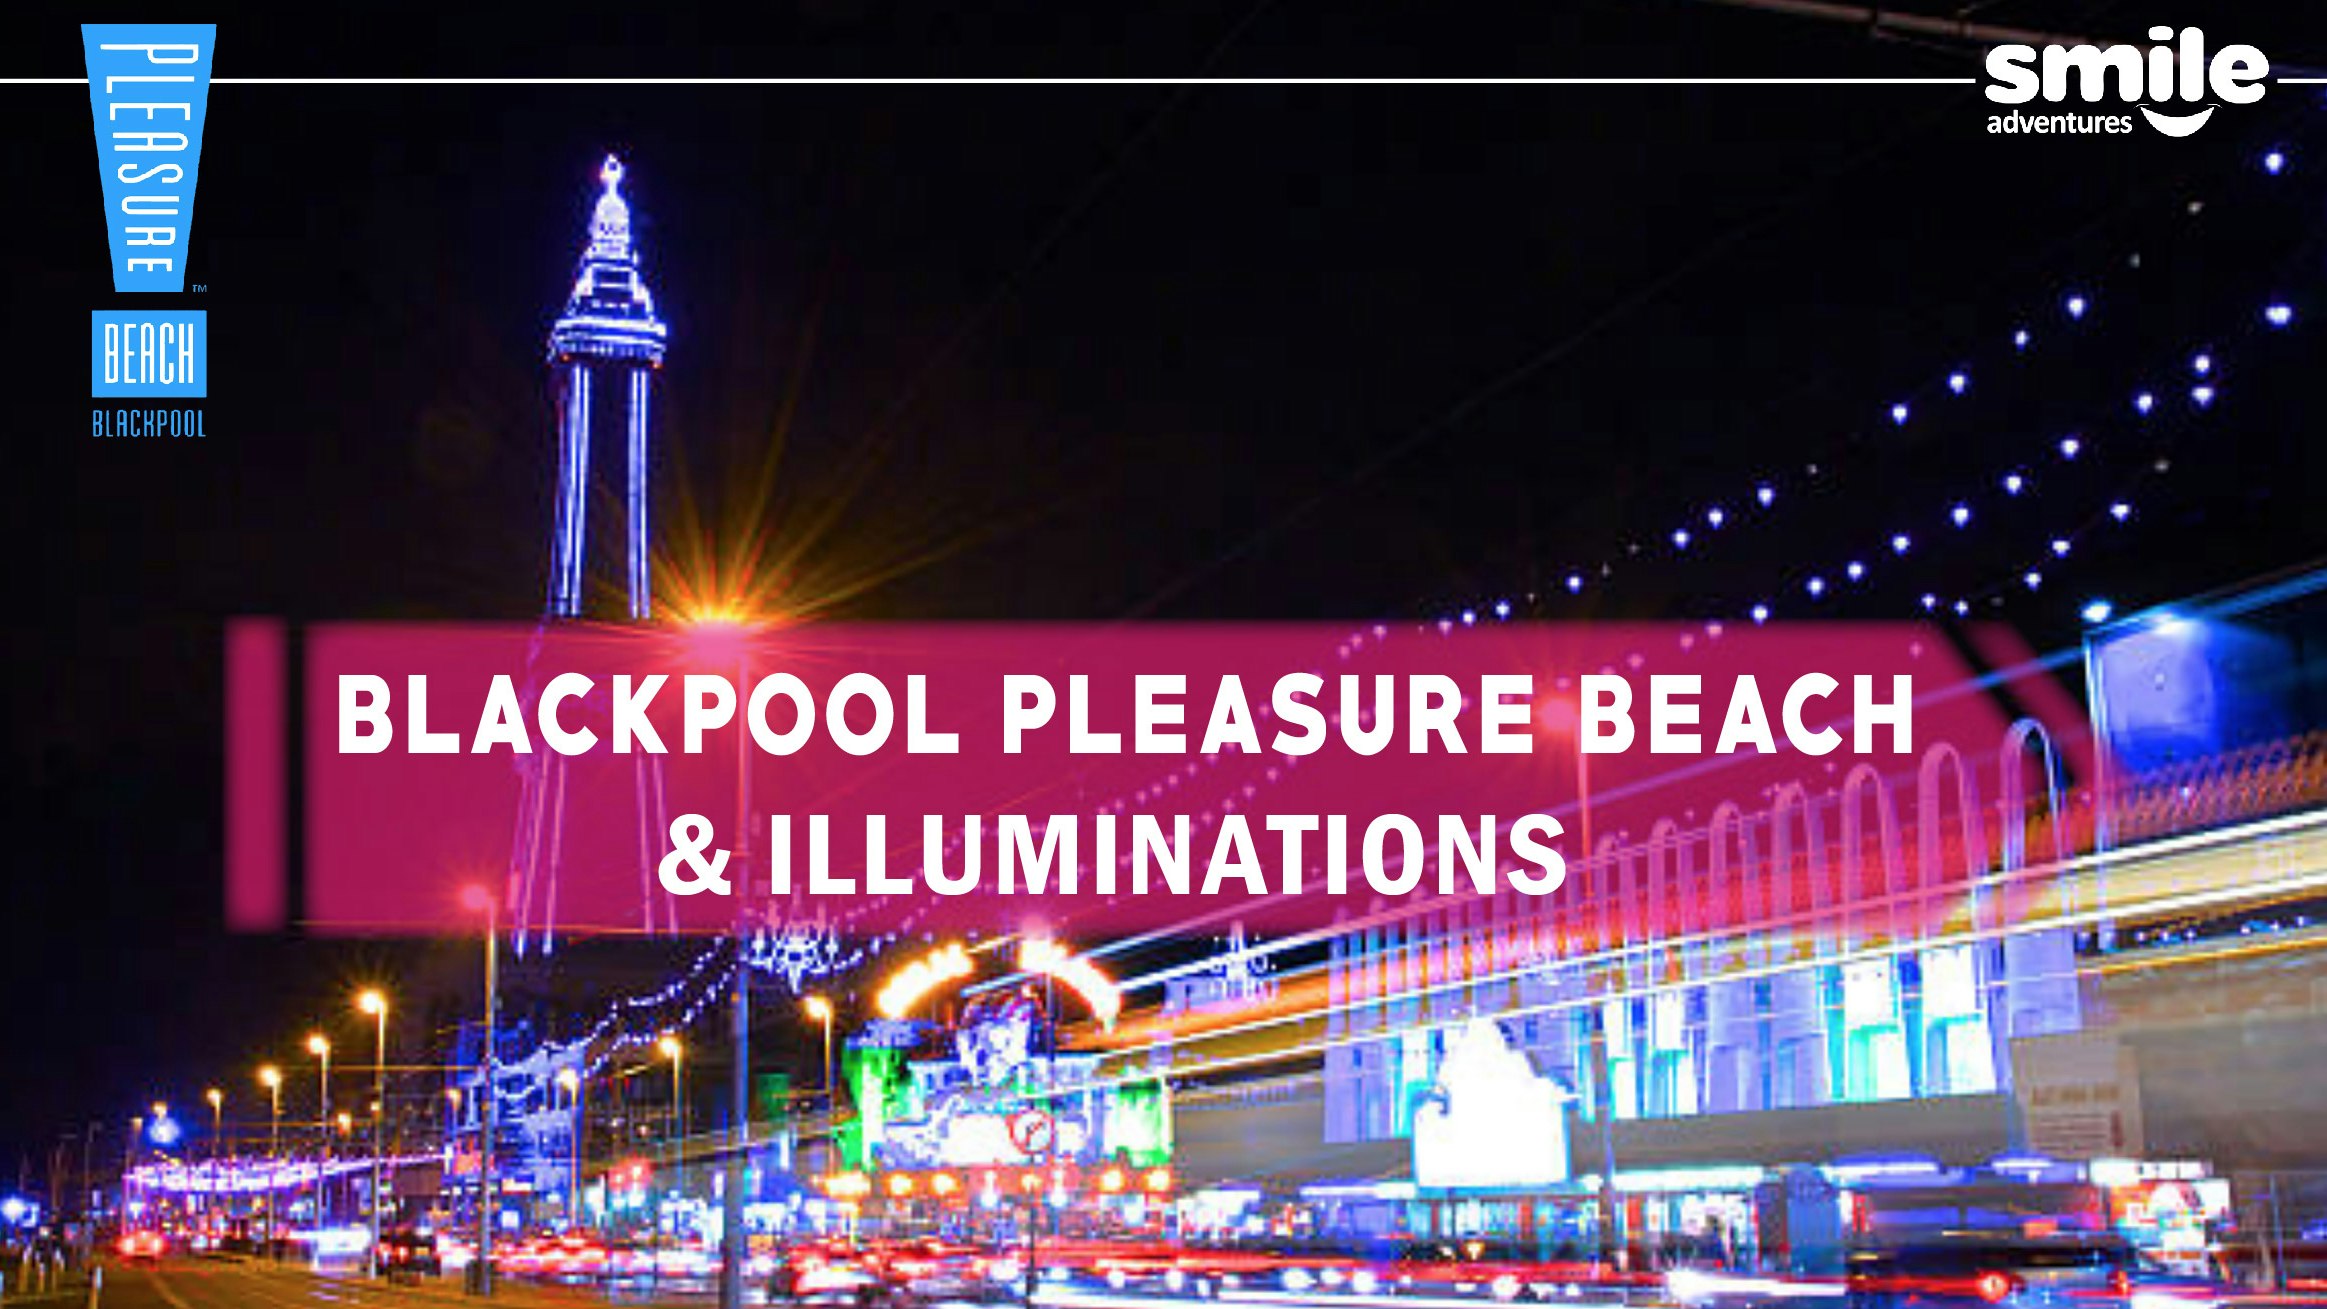 Blackpool Pleasure Beach & Illuminations – From Manchester